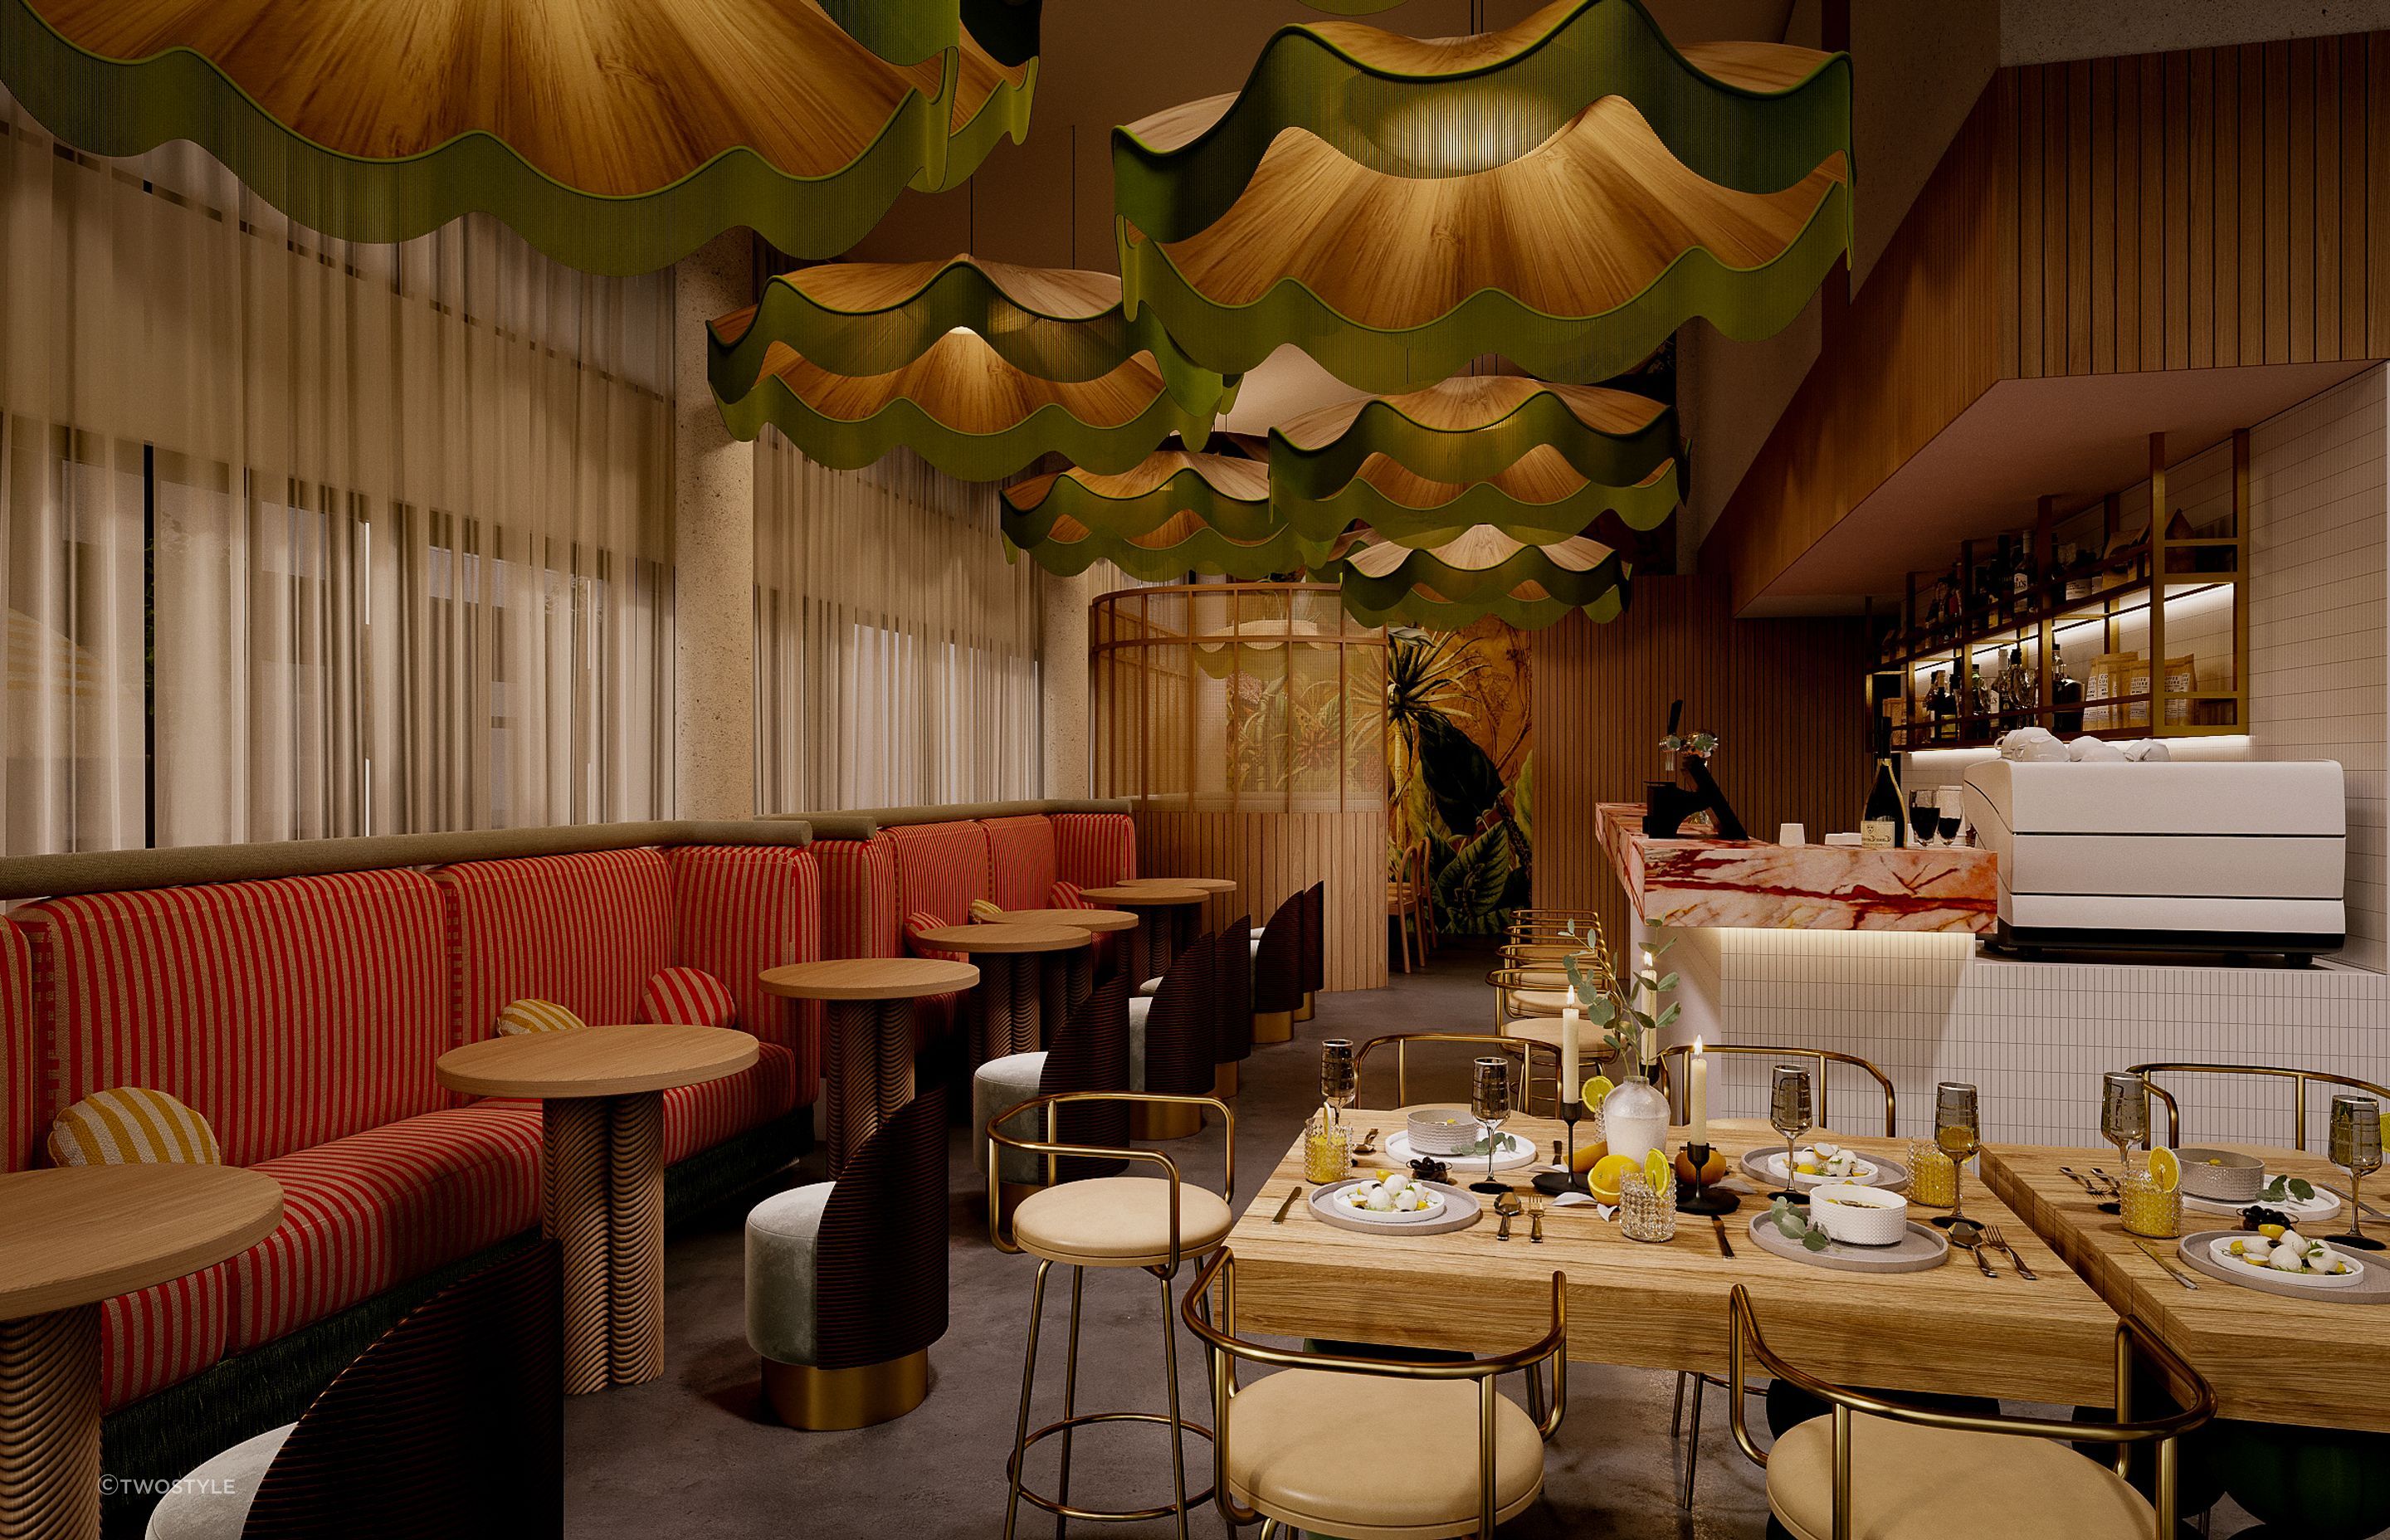 COYA Restaurant Noosa: Coming Soon